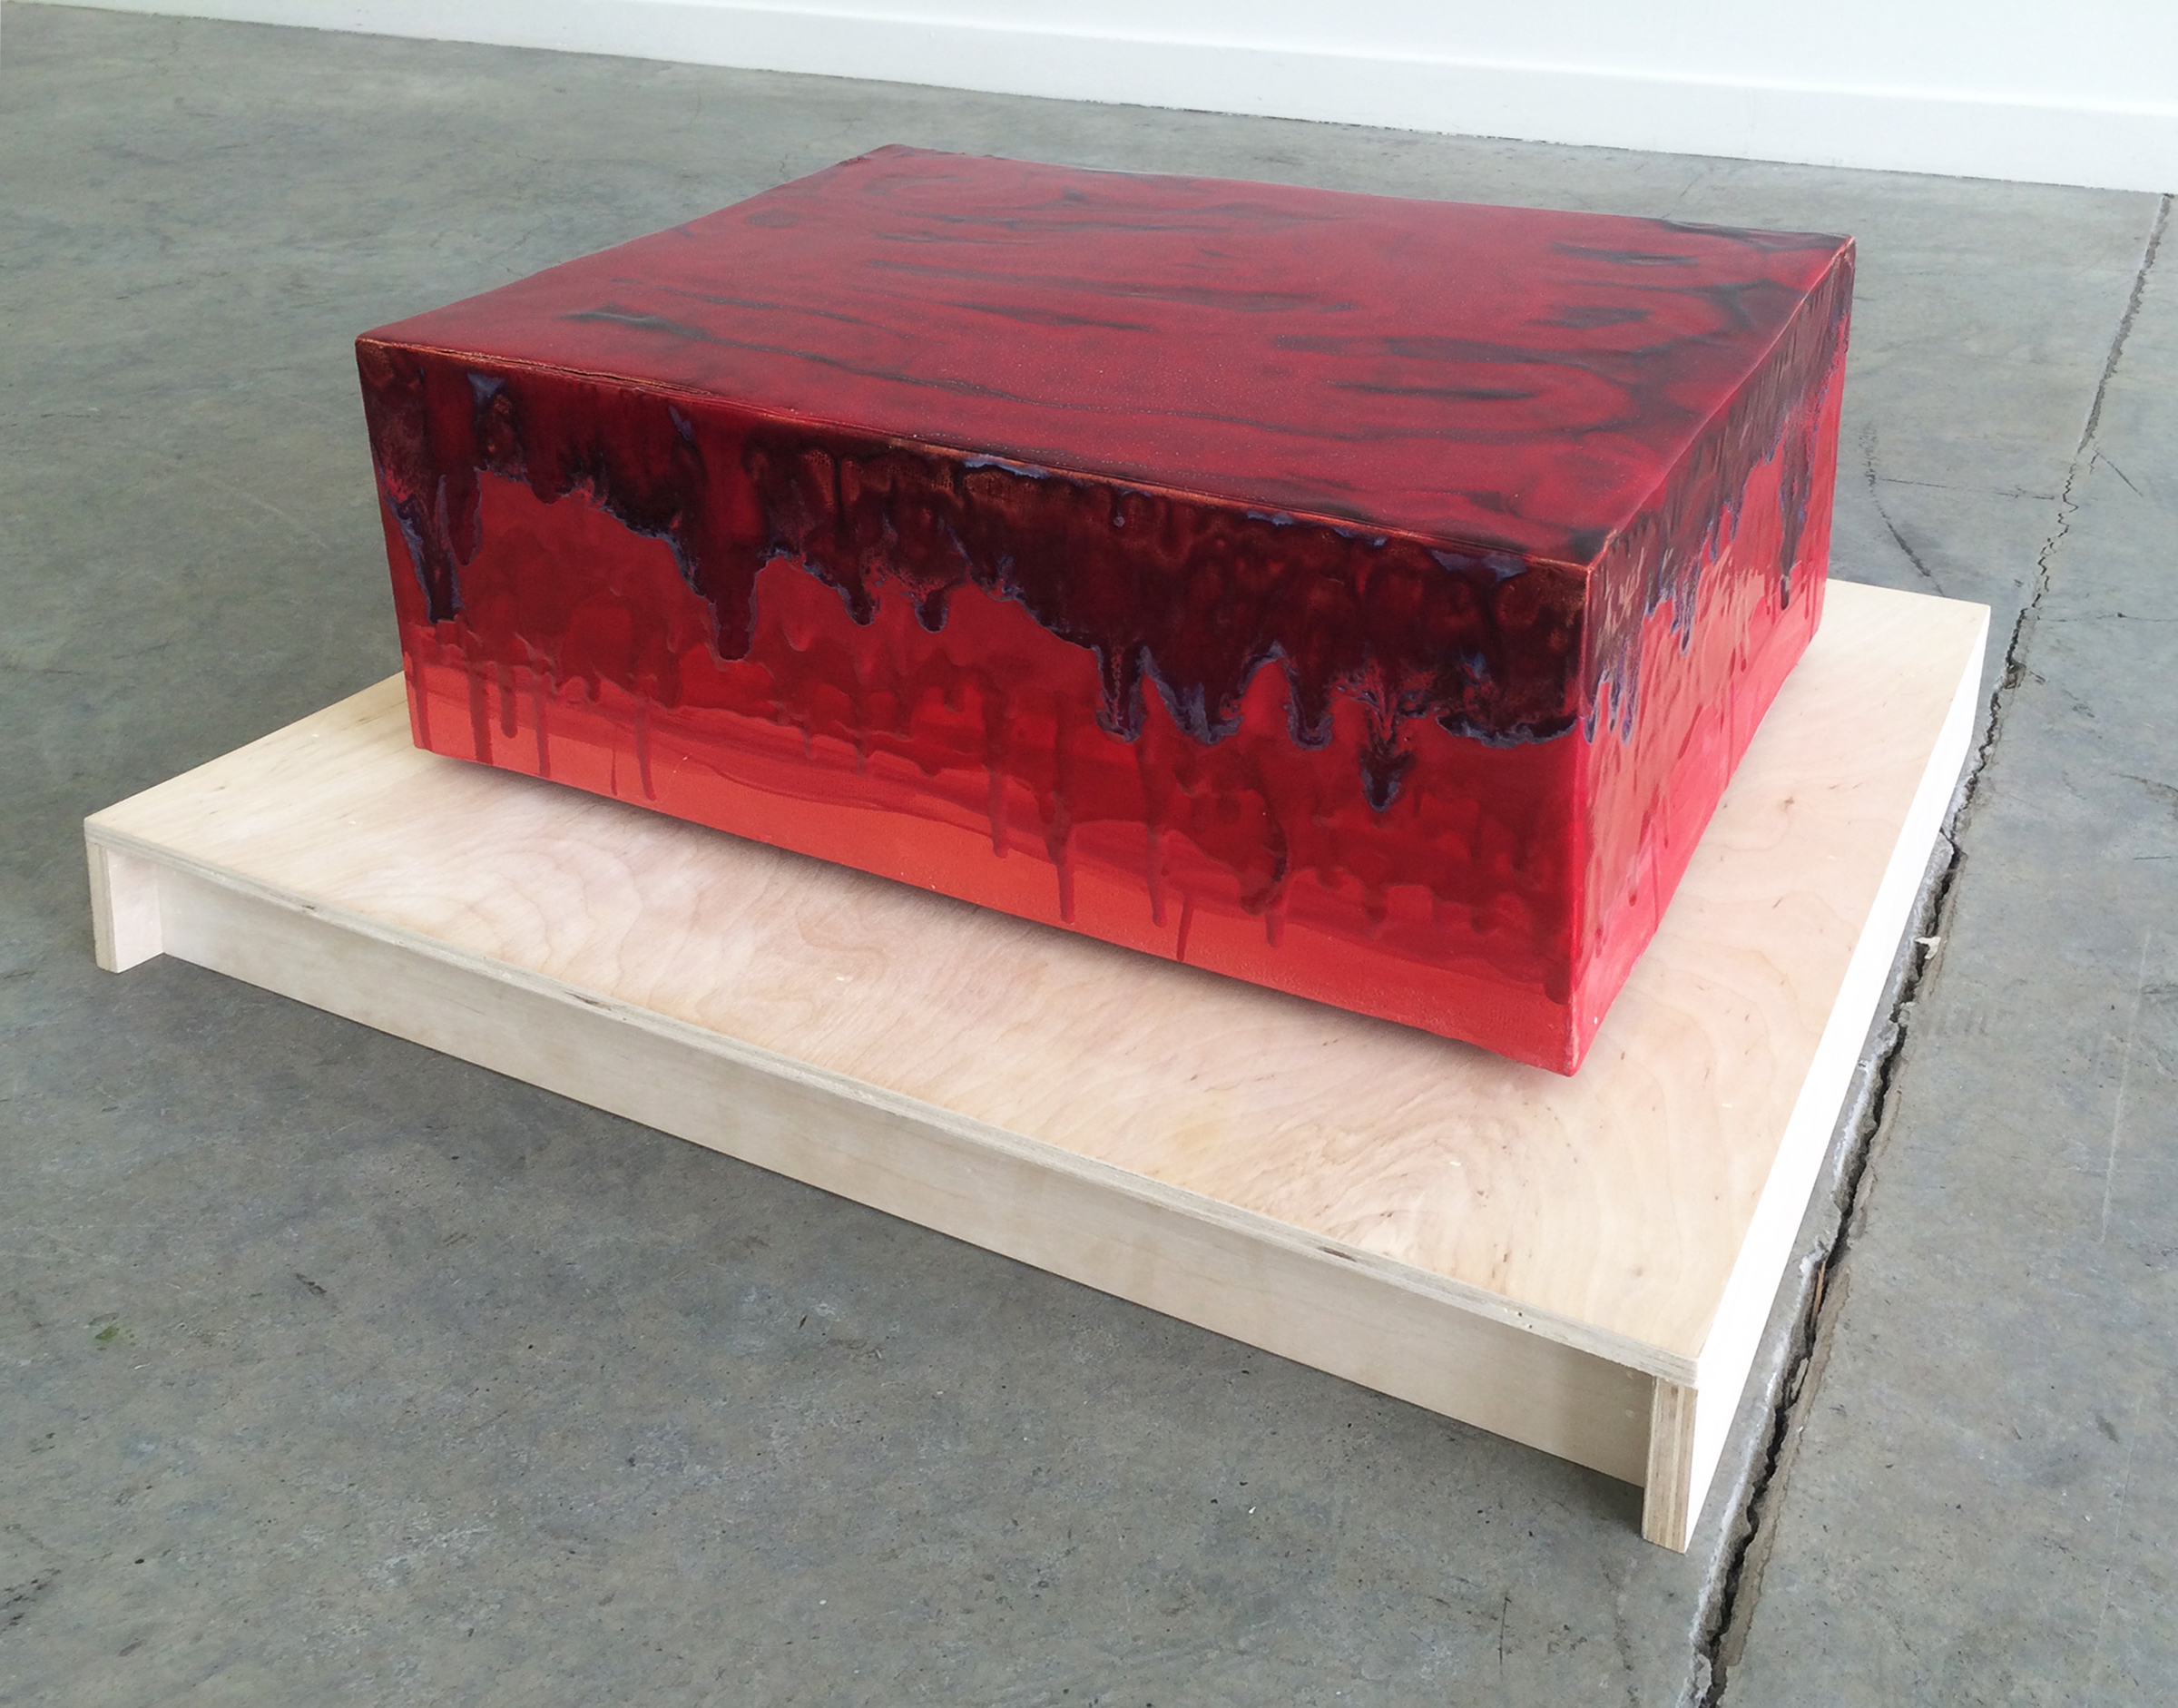   ERIK SCOLLON  (alternate view)&nbsp; Red Parade,&nbsp; 2016, Stoneware, underglaze and glaze (4 firings), 8" x 19" x 14" 